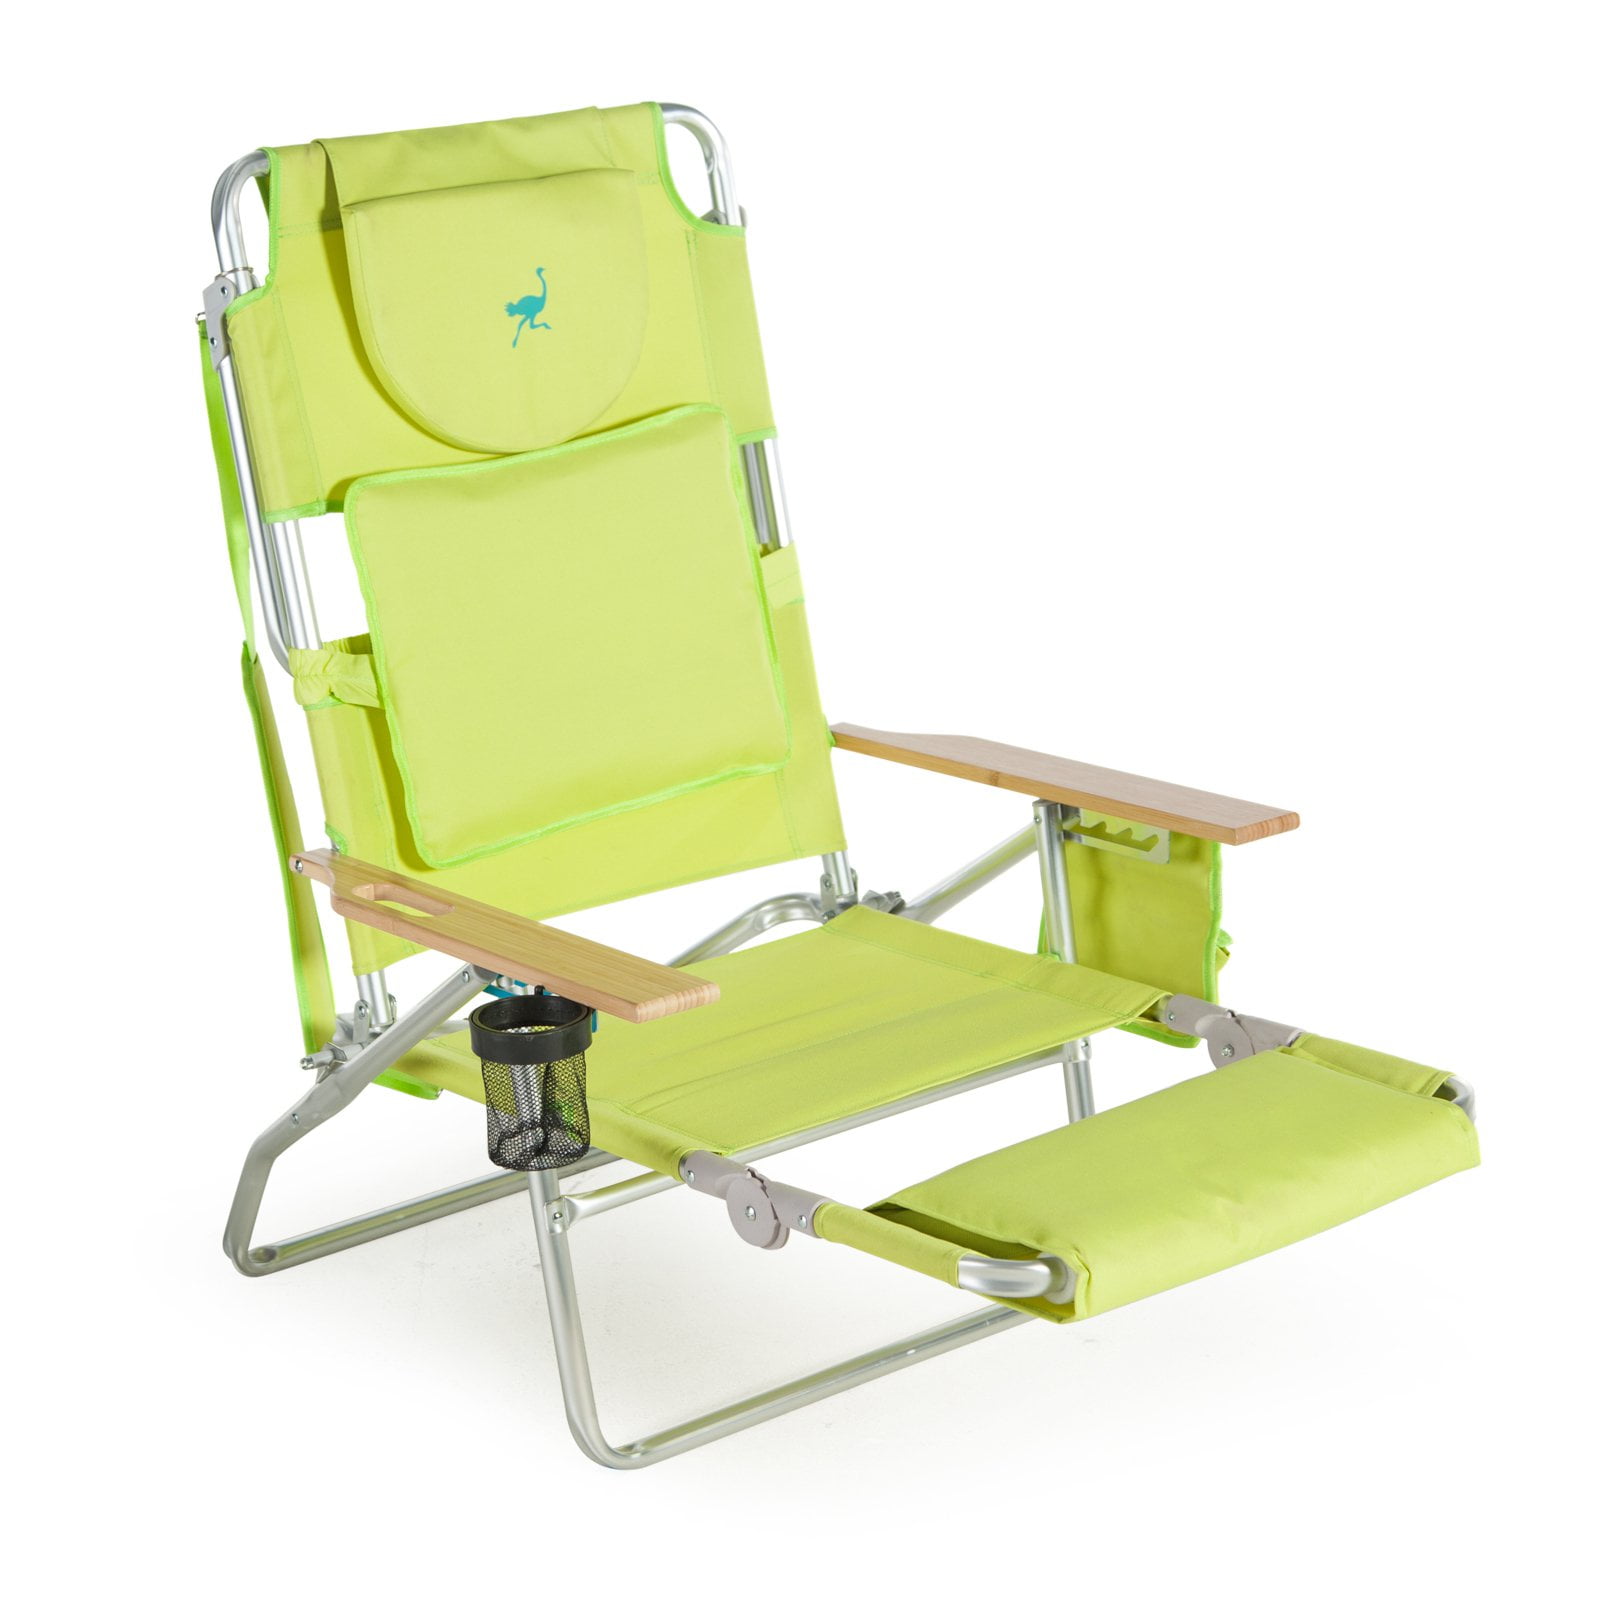 Ostrich Deluxe 3-in-1 Lounge Aluminum Beach Chair - Lime Green - Walmart.com